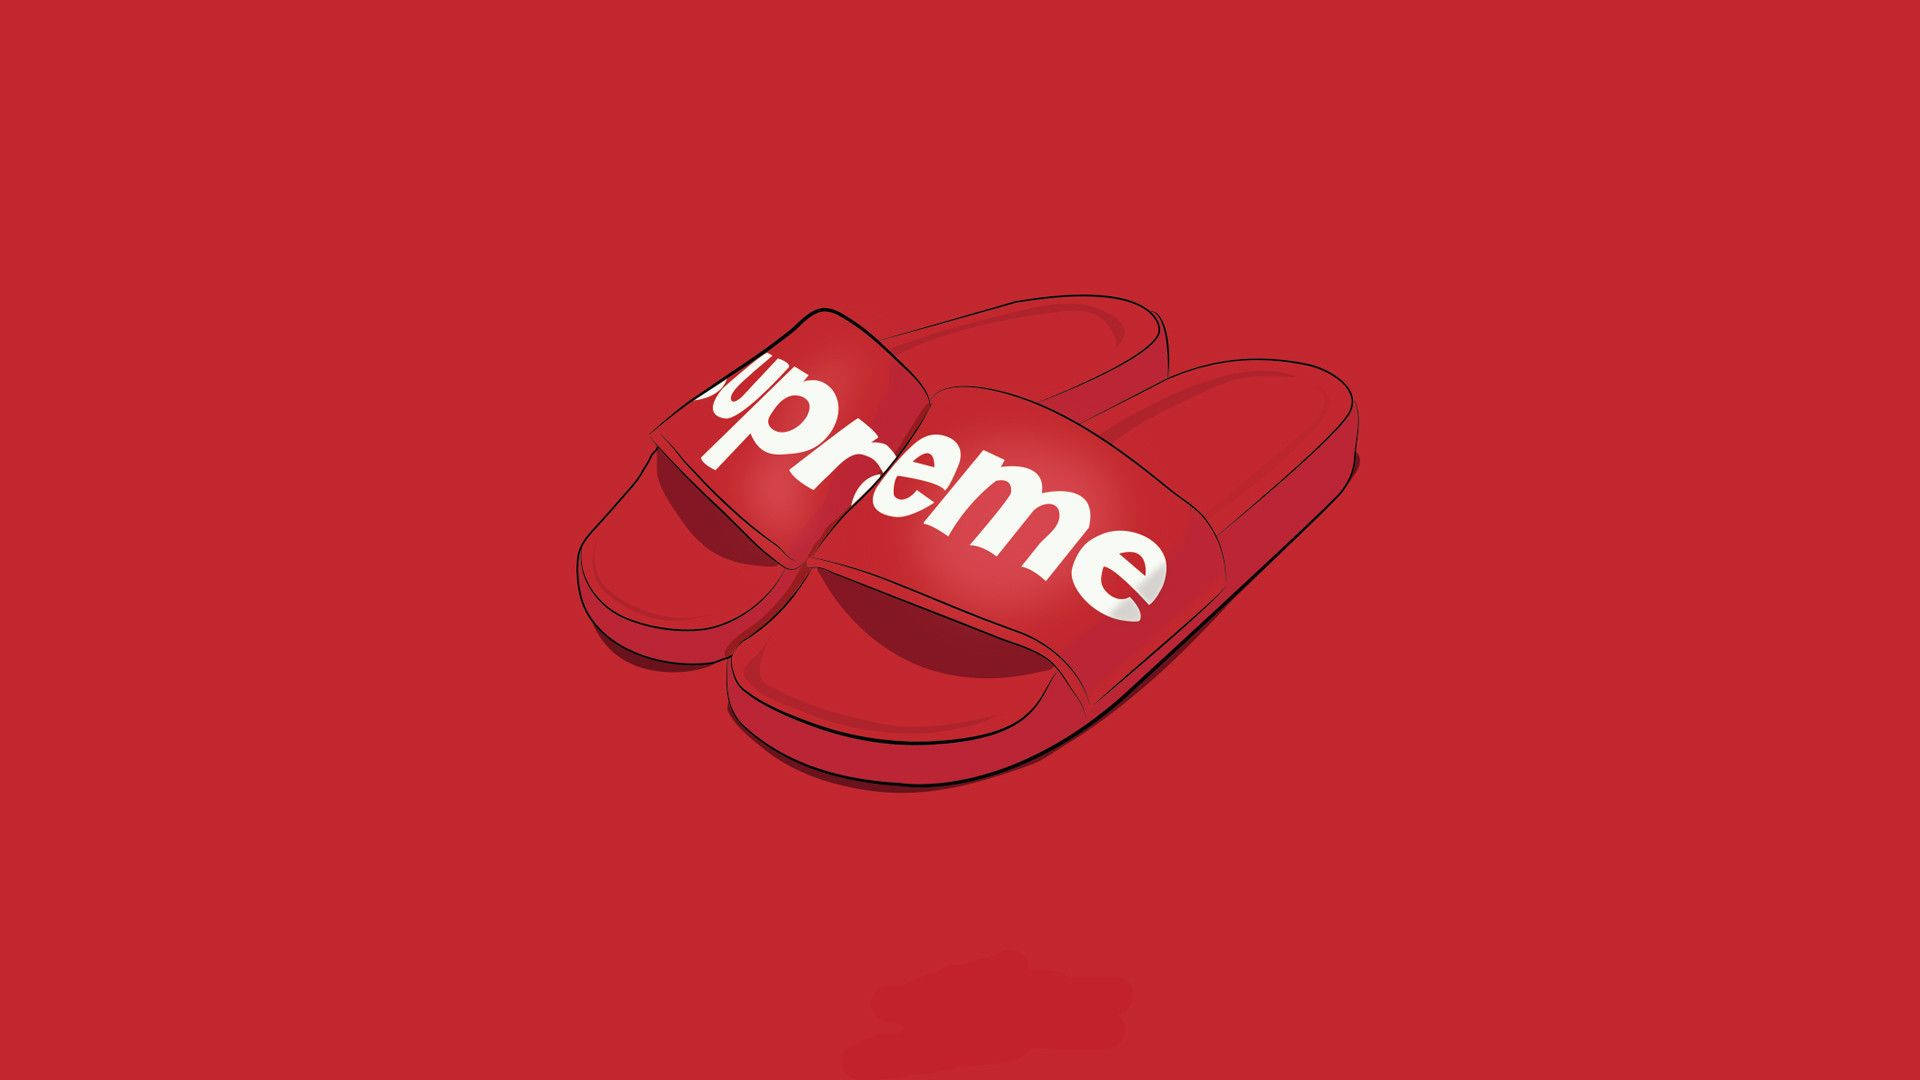 Supreme Brand Slide In Red Background